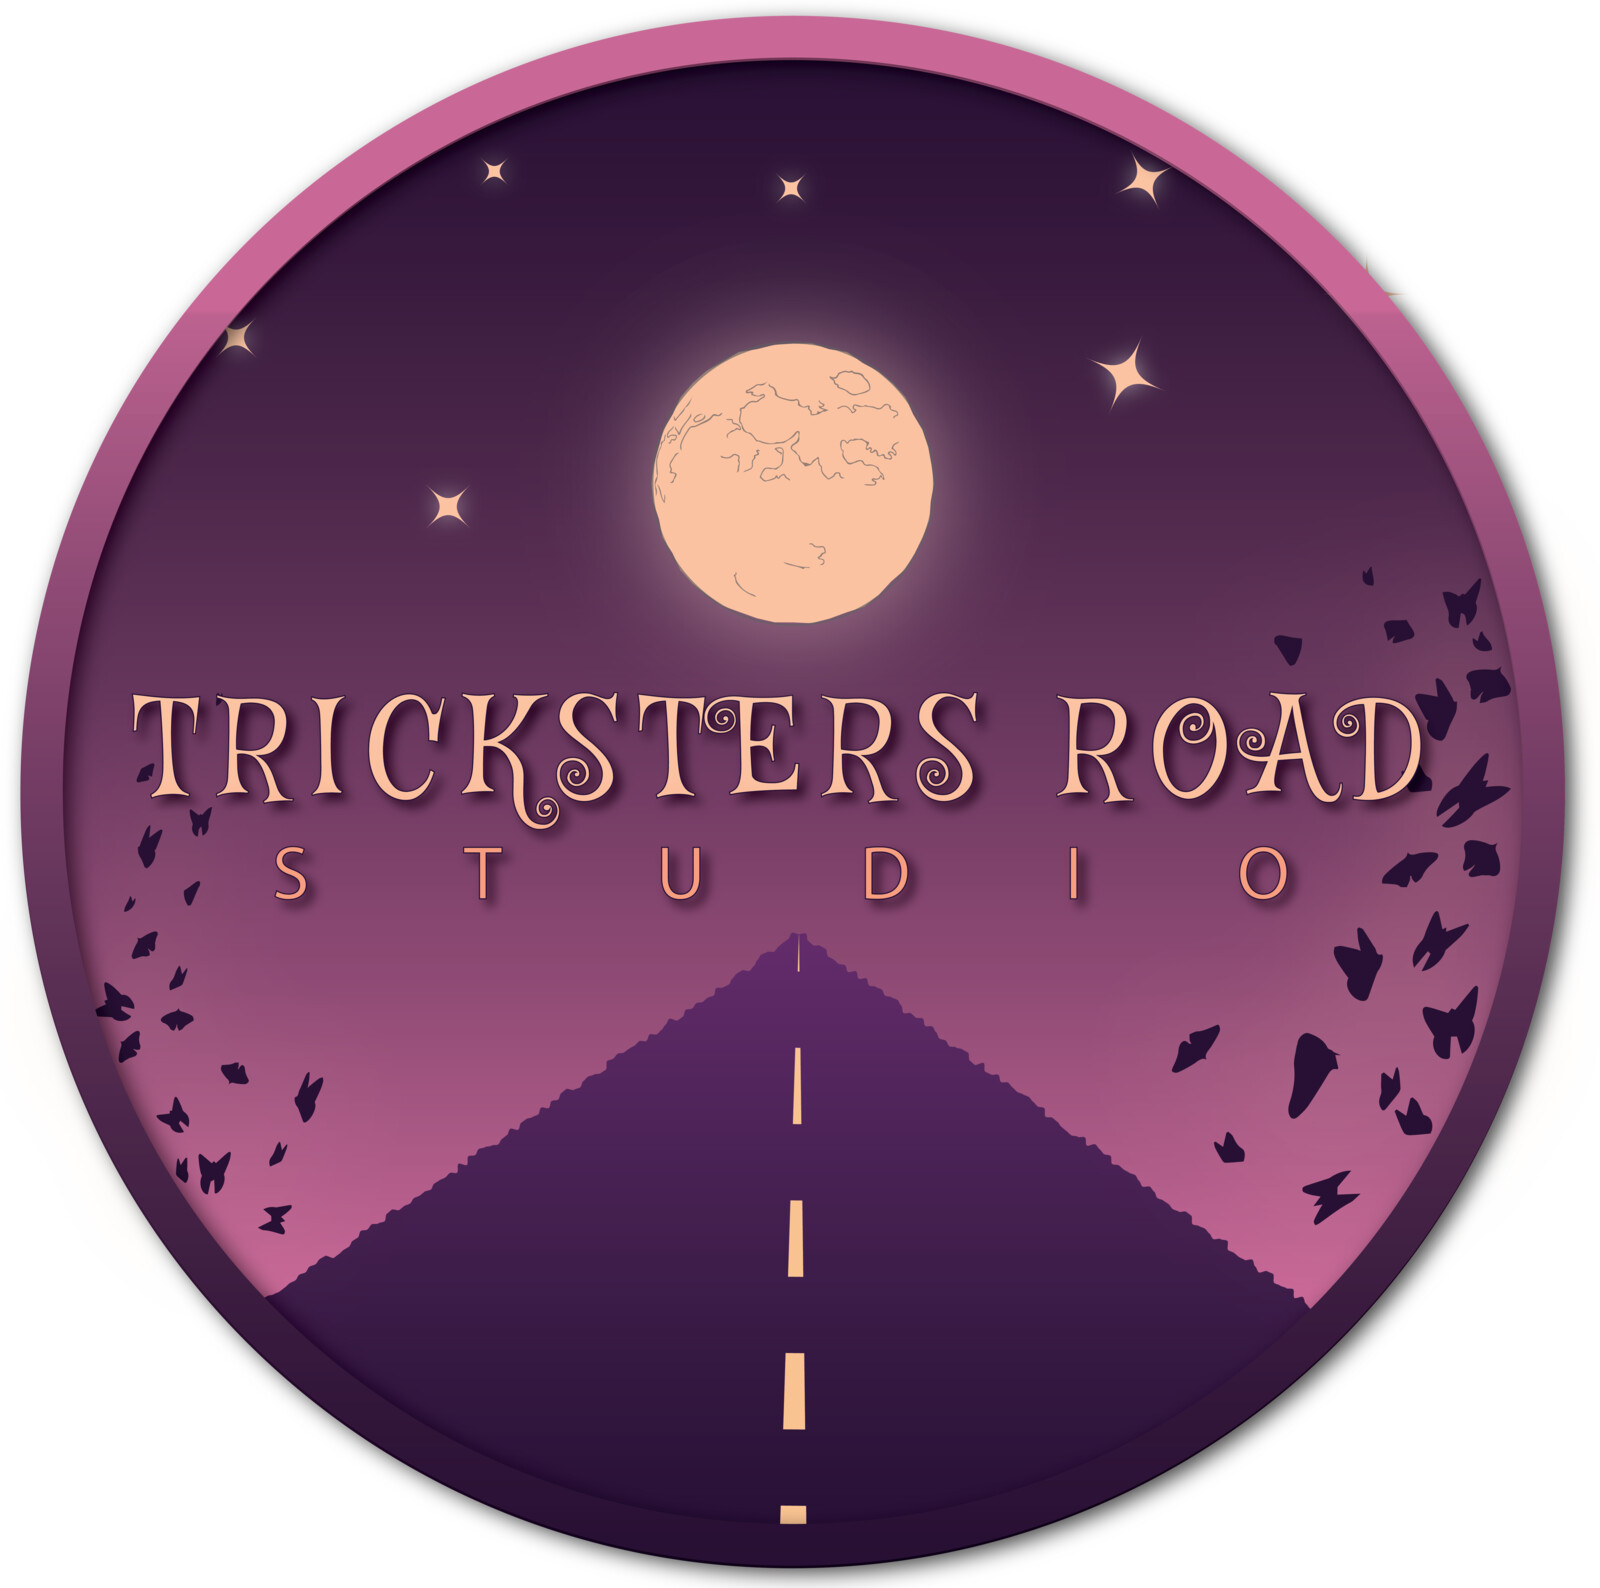 Trickesters Road Studio - Adobe Illustratror